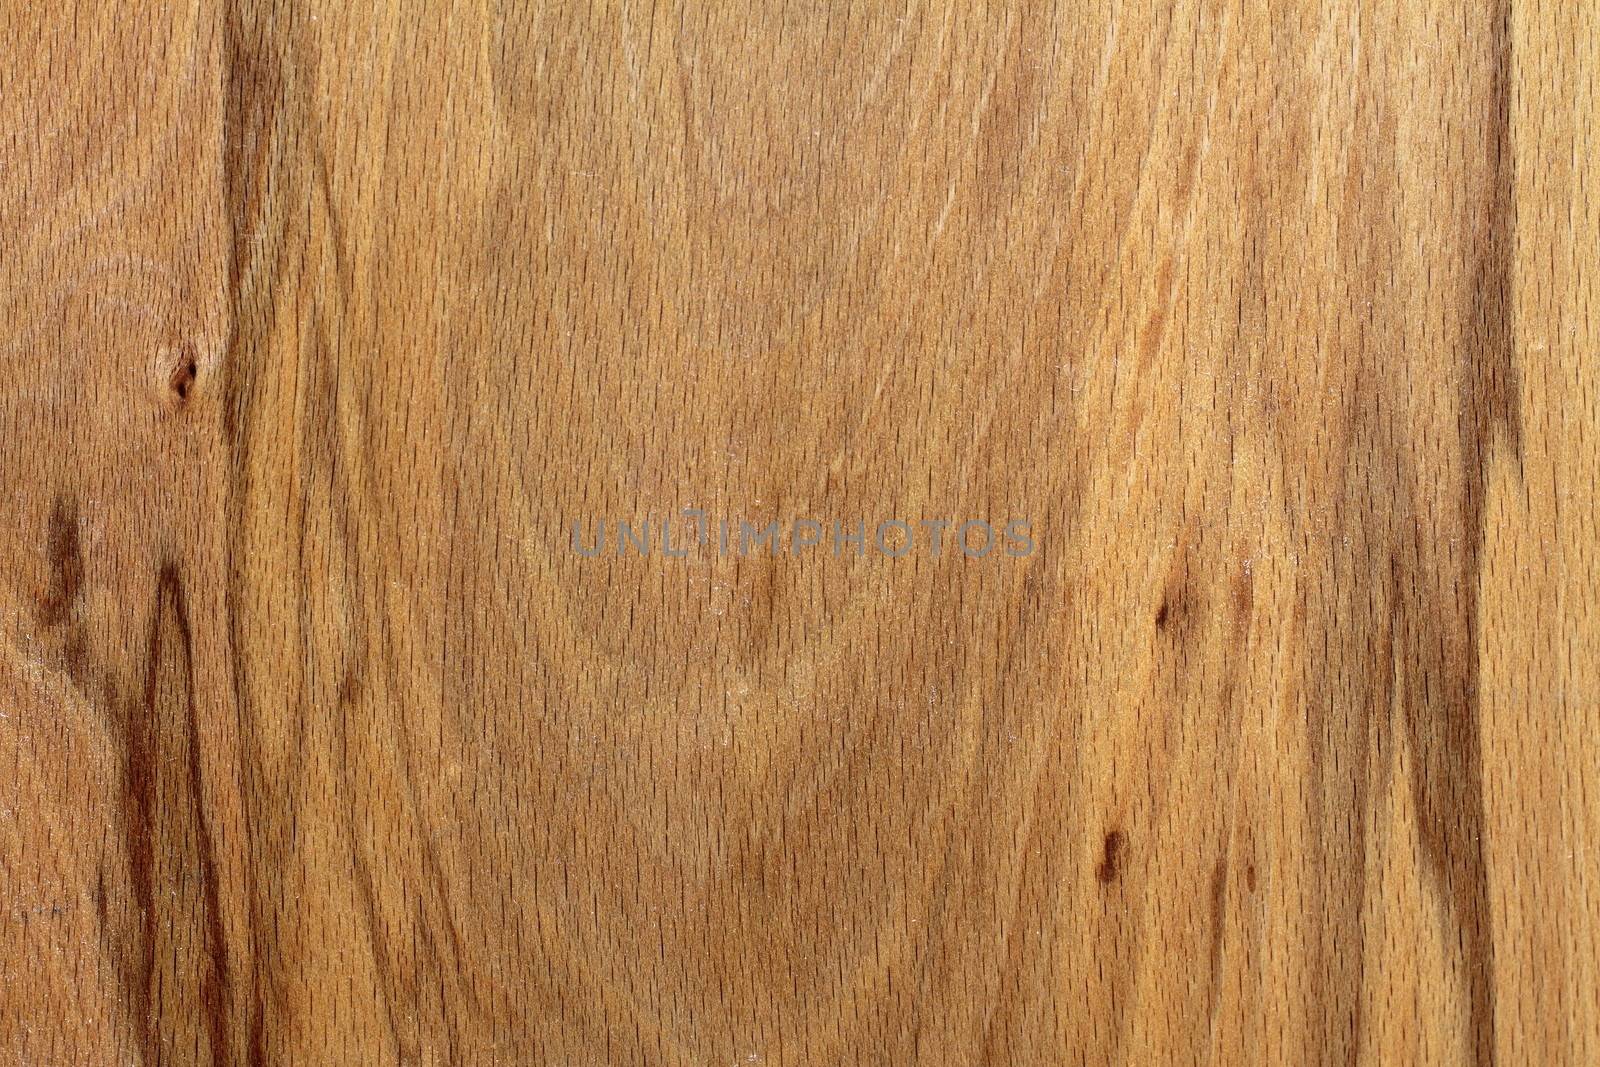 textured wood veneer with veins by taviphoto